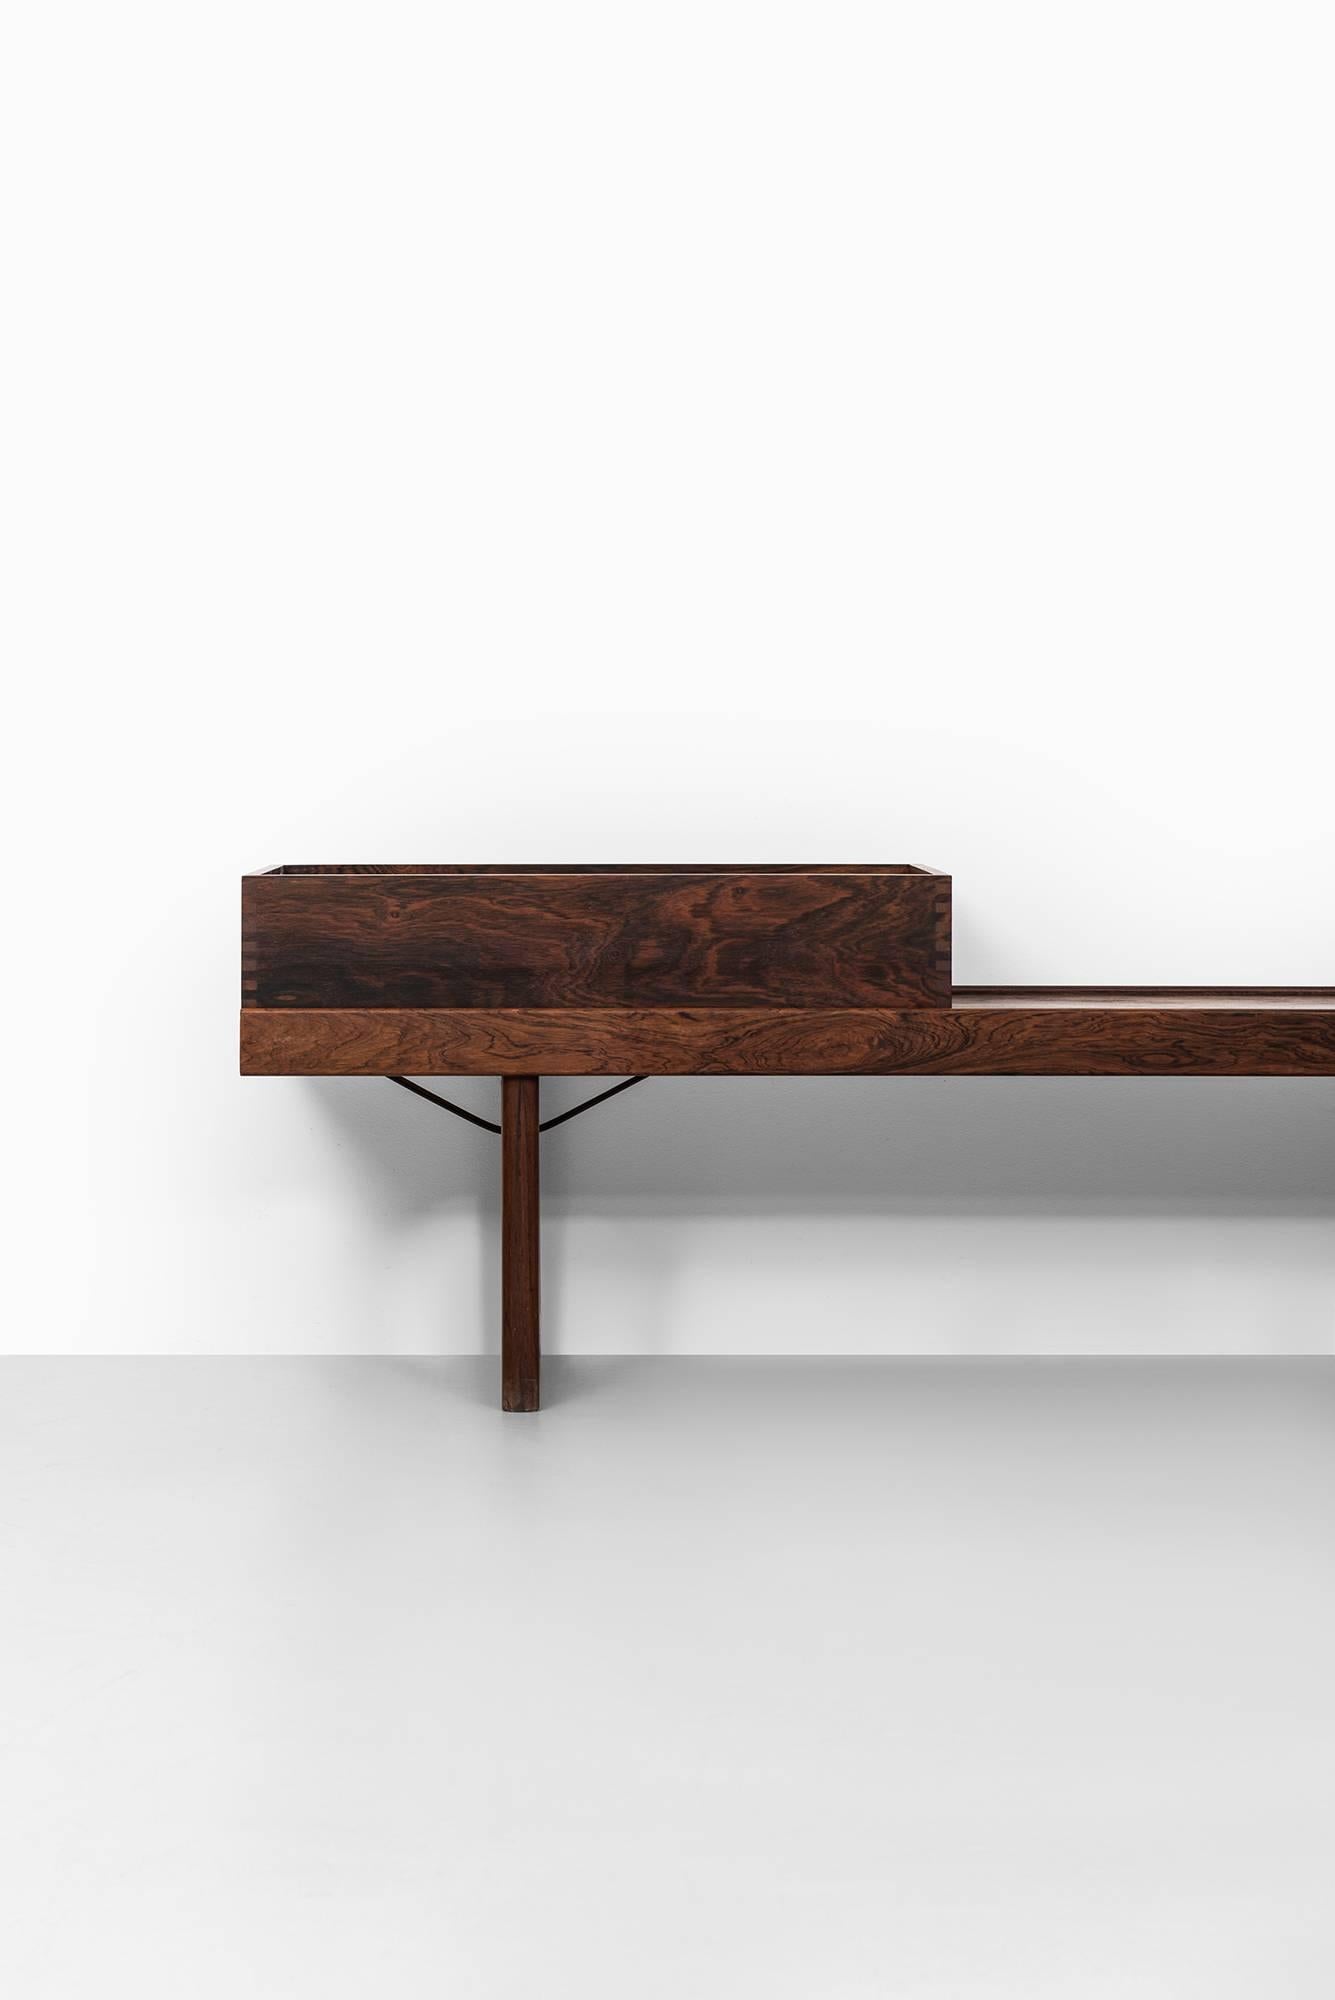 Bench or side table with flower box model Krobo designed by Torbjørn Afdal. Produced by Bruksbo in Norway.